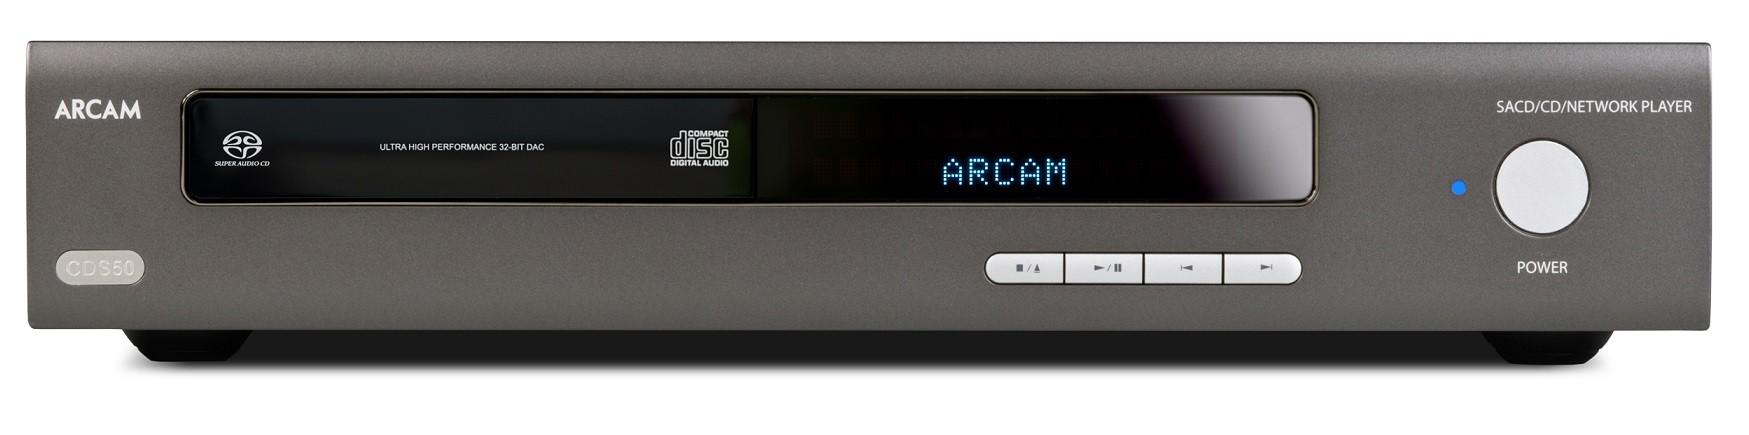 Arcam - CDS50 Source tout-en-un lecteur CD / SACD / Streamer / Convertisseur DAC